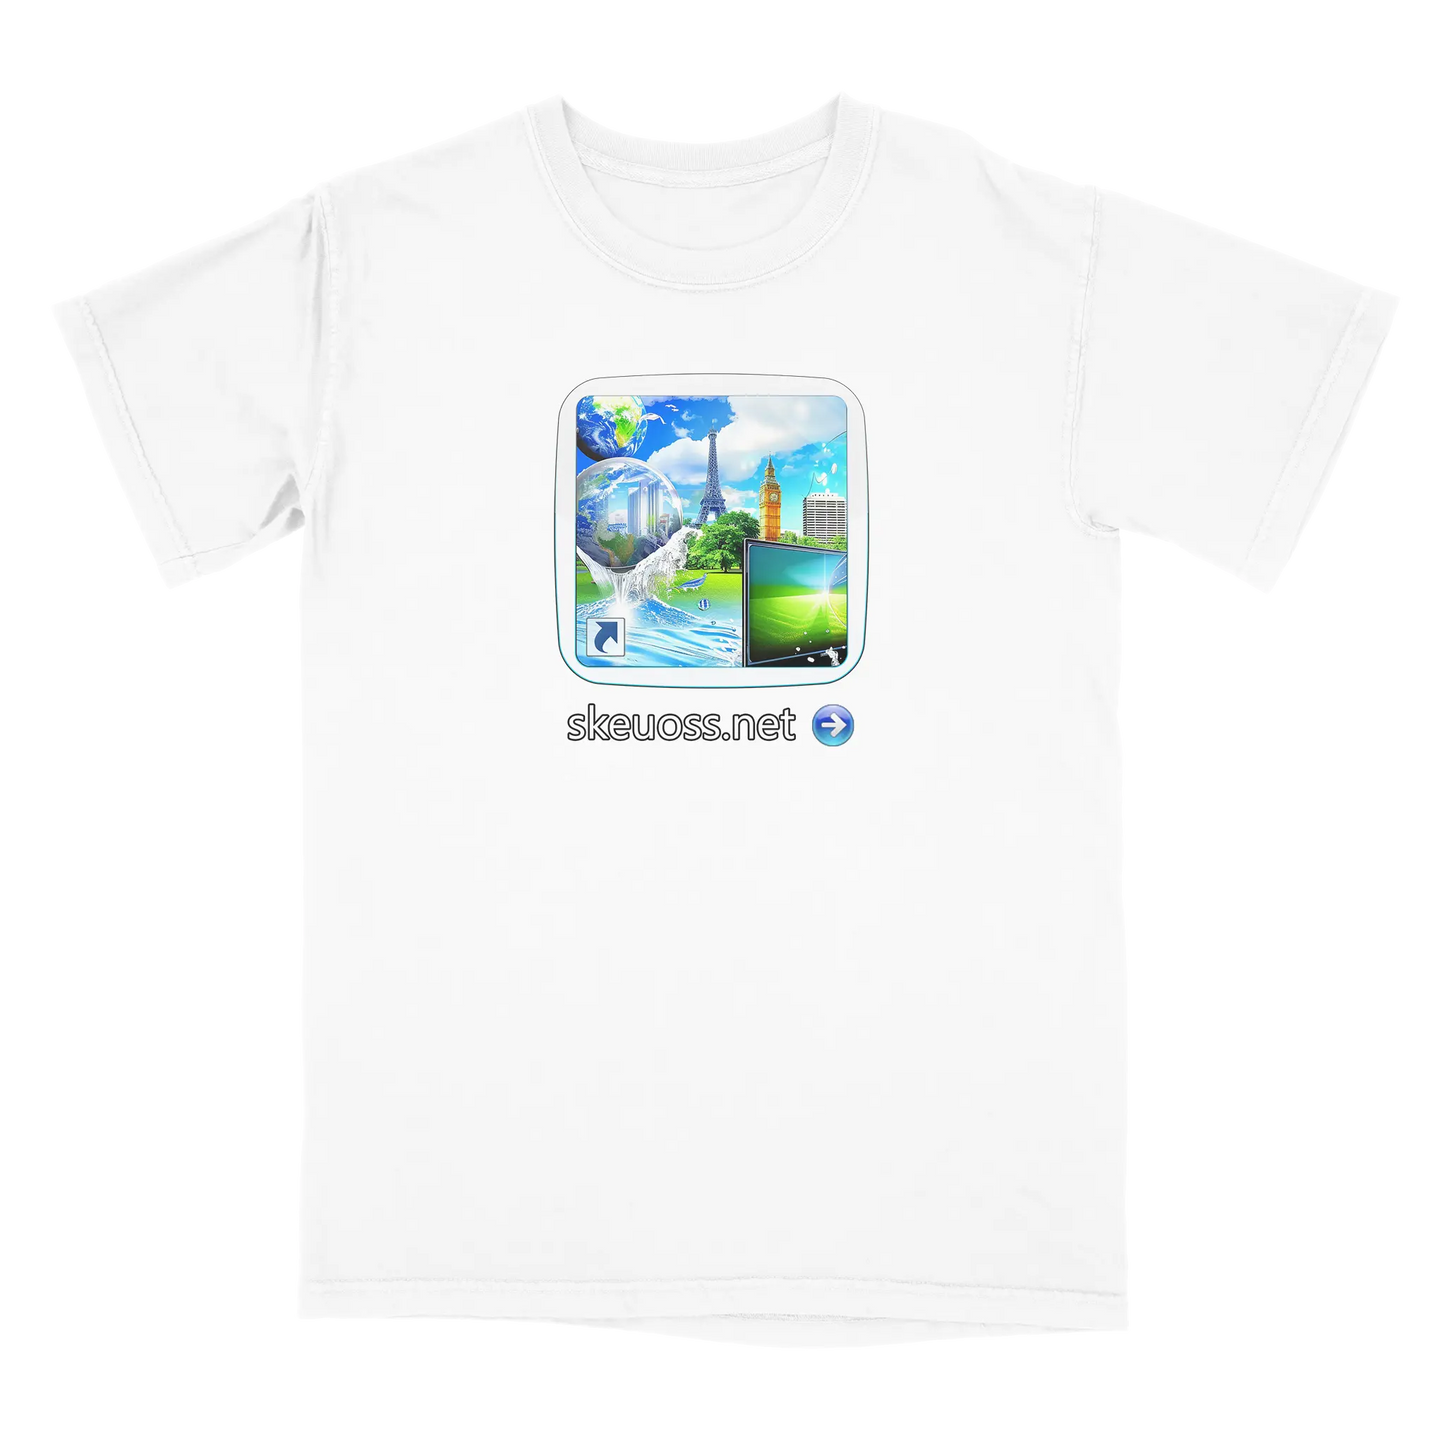 Frutiger Aero T-shirt - User Login Collection - User 175